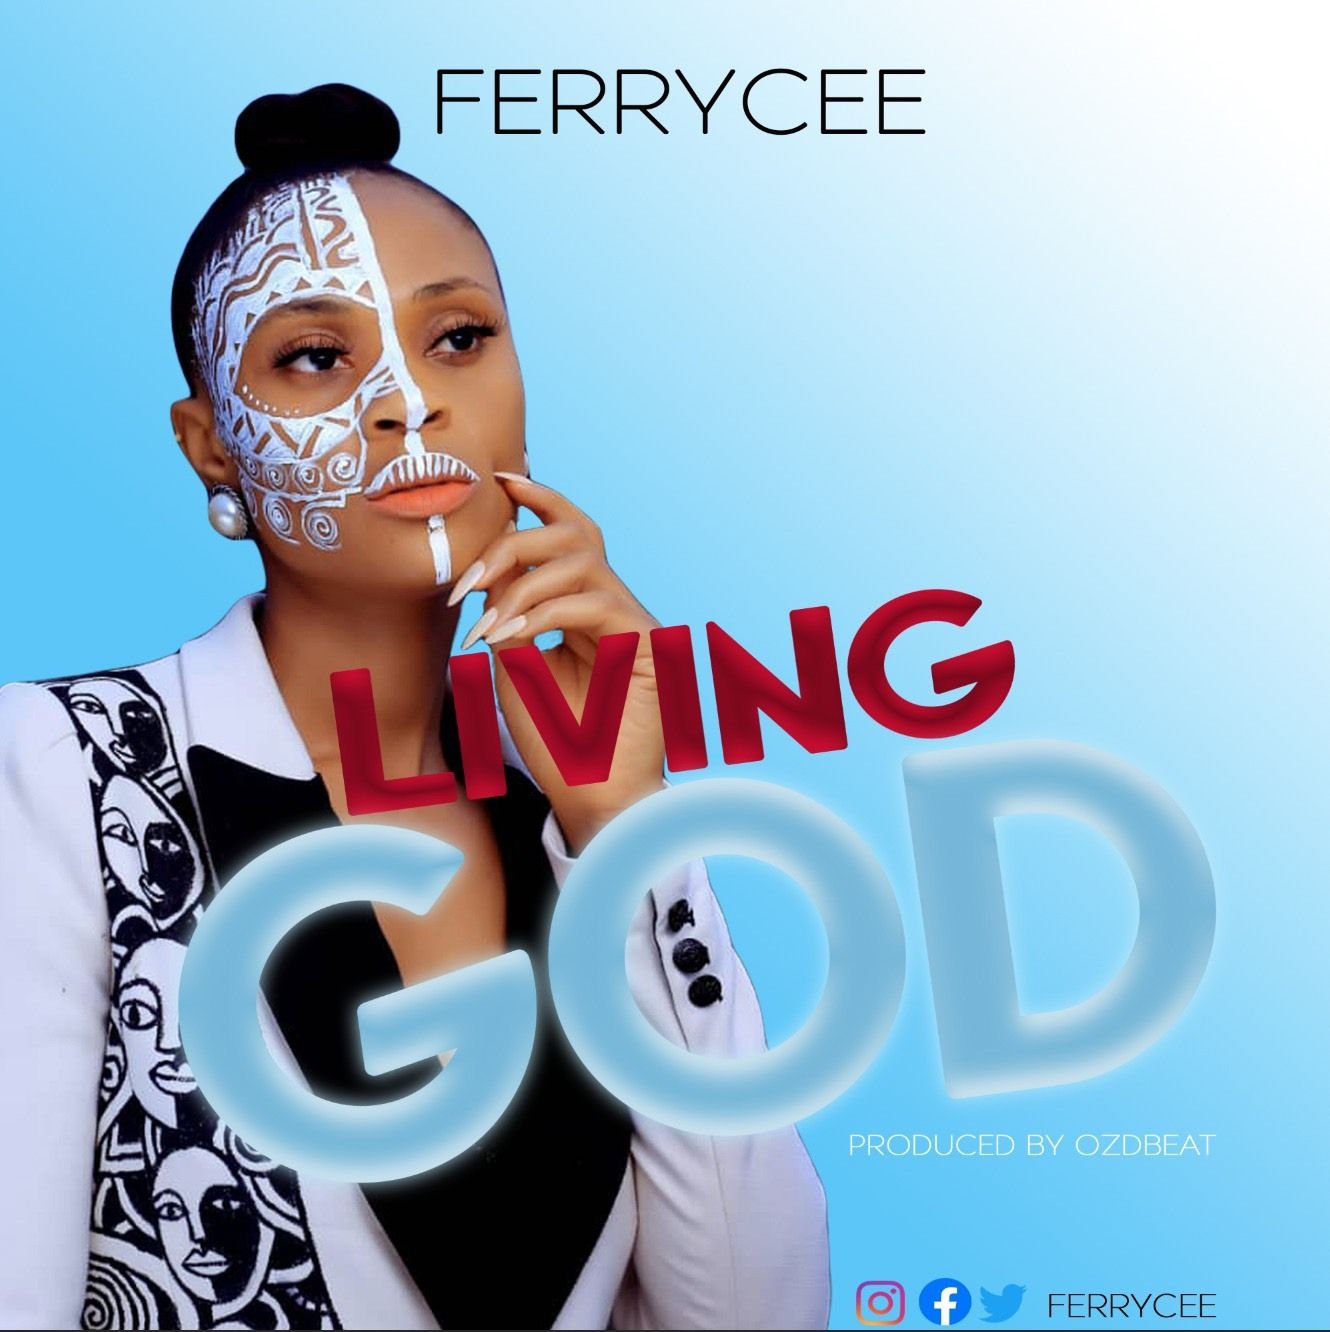 Ferrycee - LIVING GOD (prod. by OzdBeat) Artwork | AceWorldTeam.com